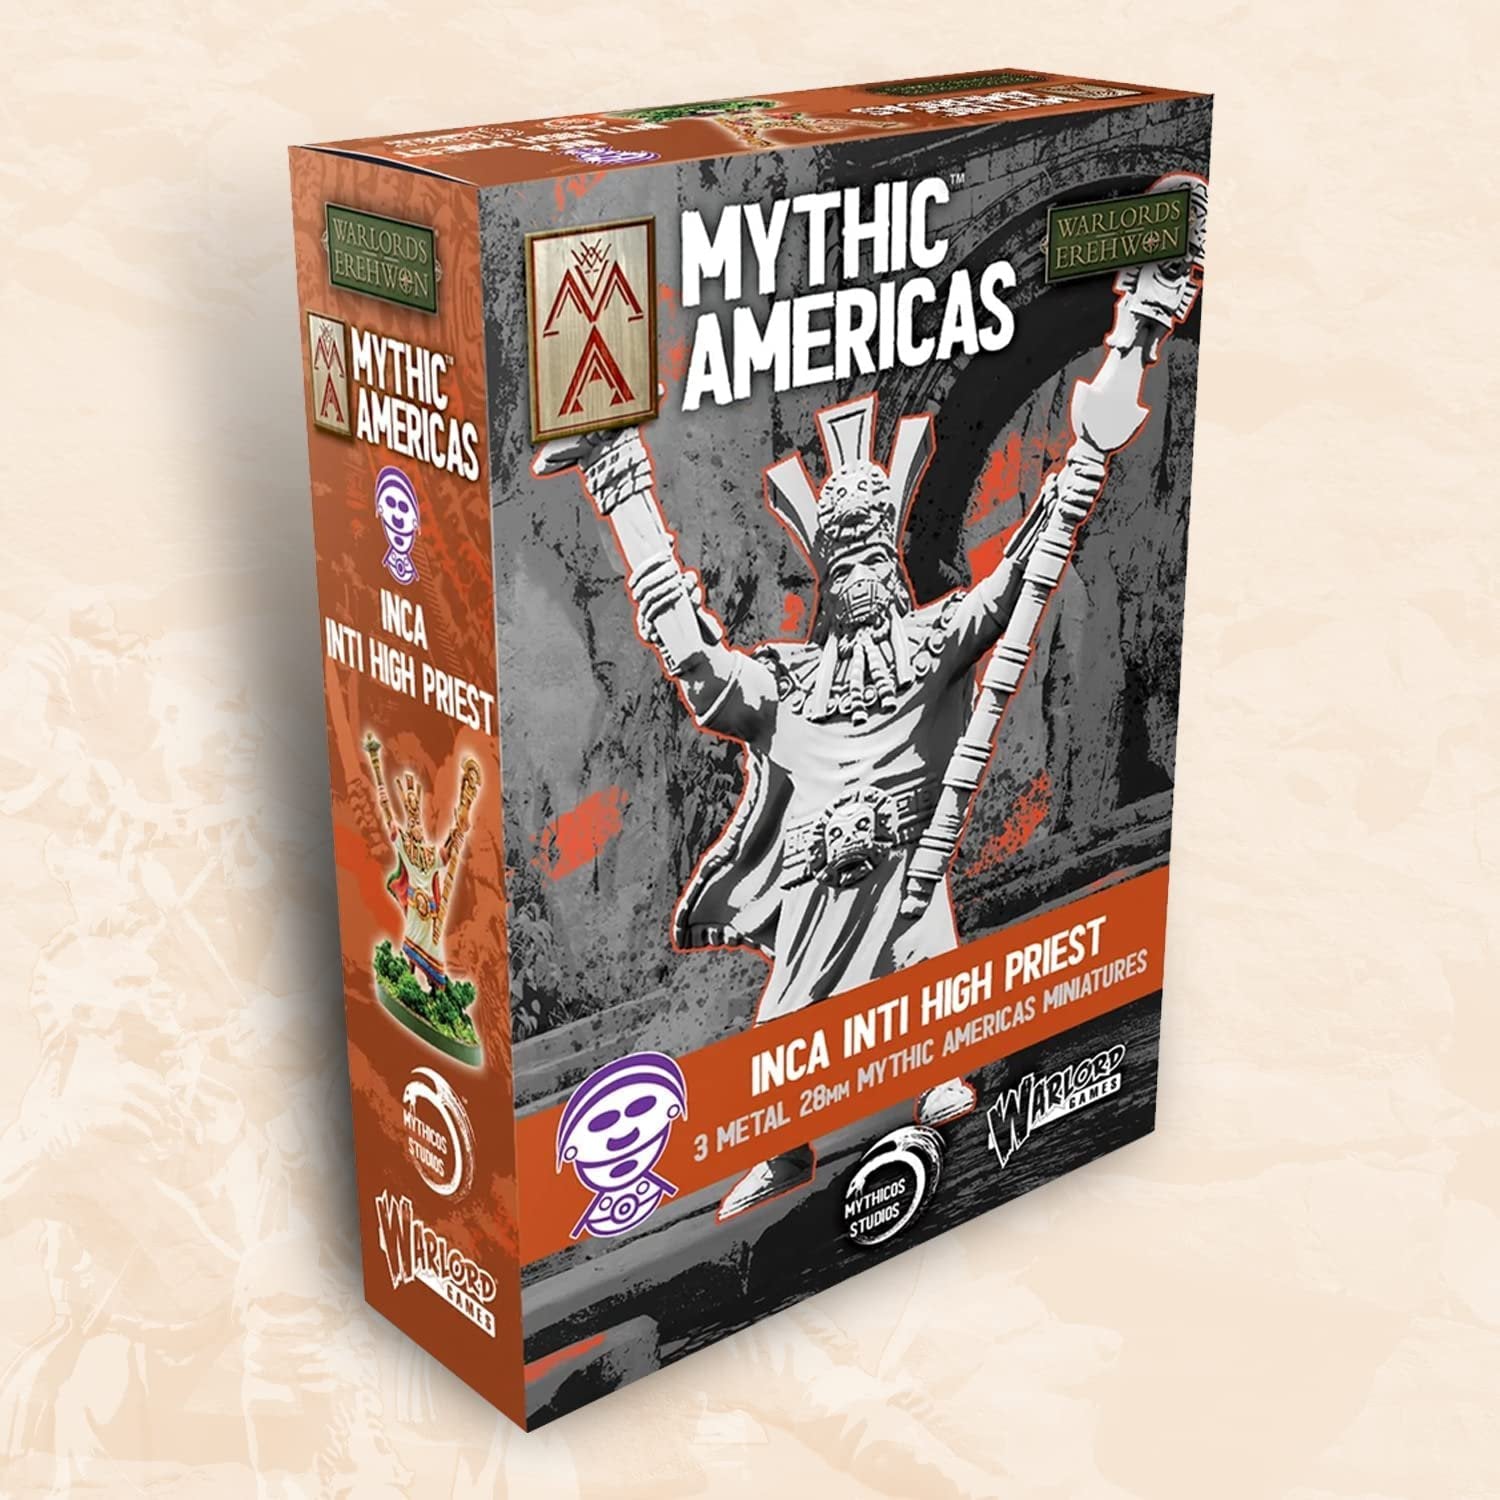 Mythic Americas - Inca: Inti High Priest Set